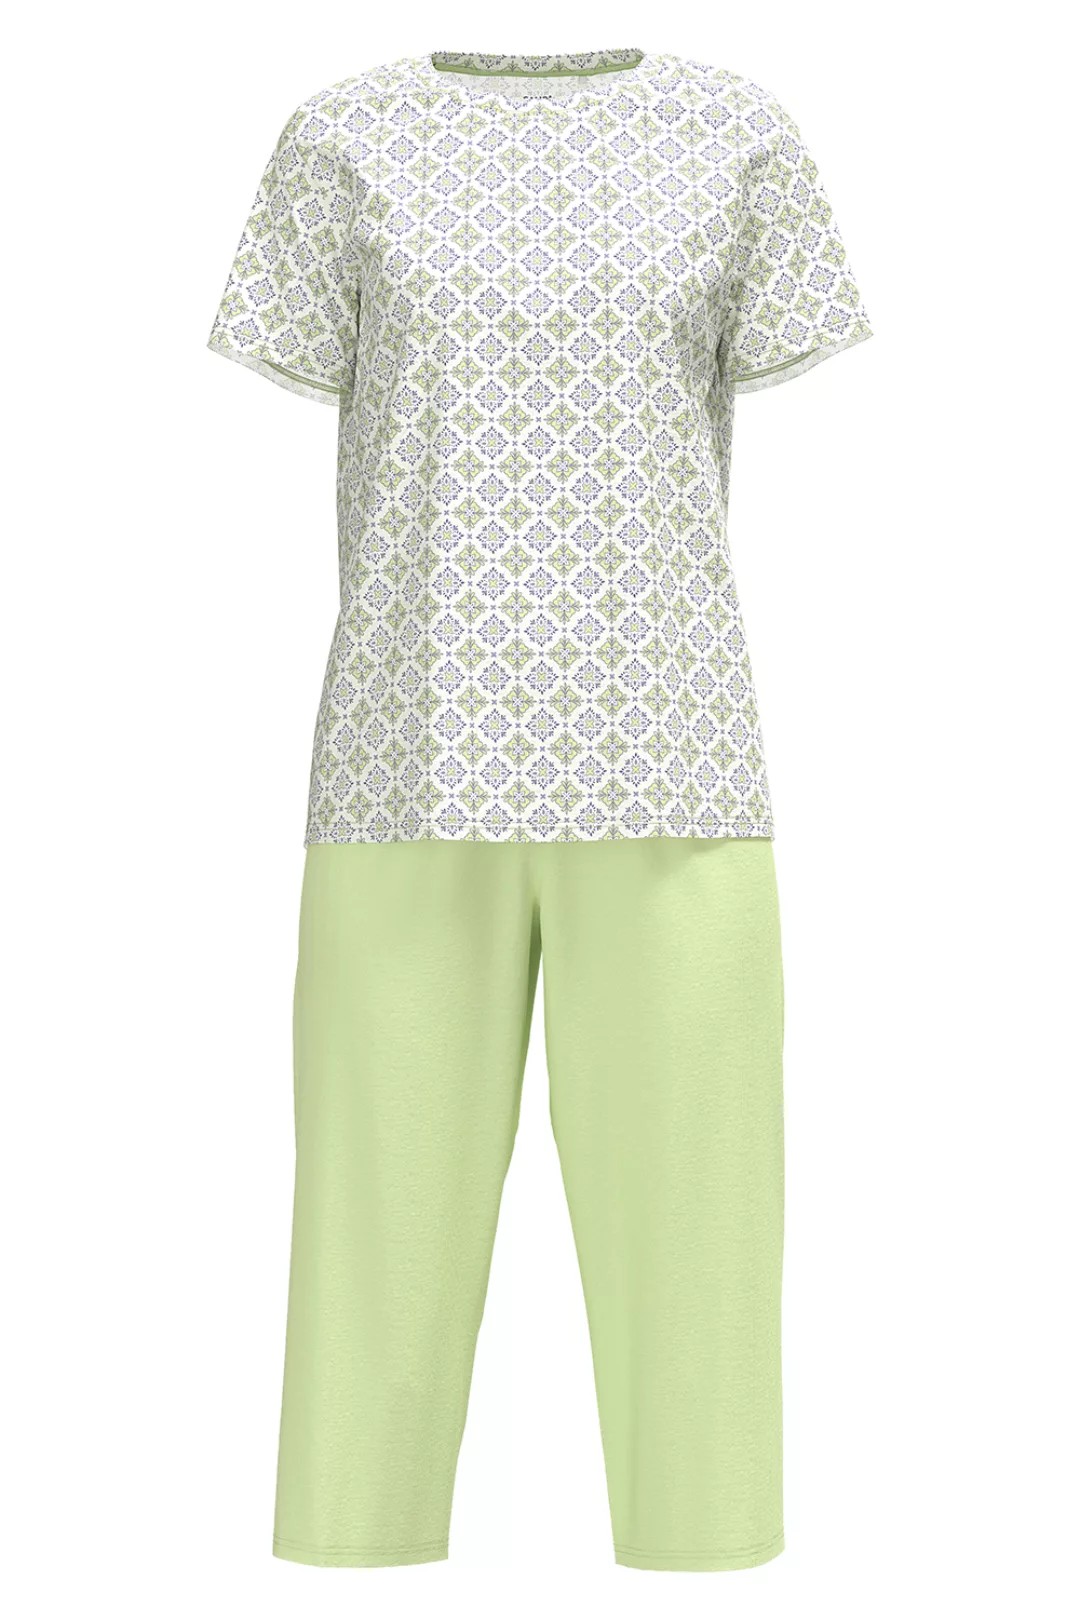 Calida Pyjama 3/4 Spring Nights 48 grün günstig online kaufen